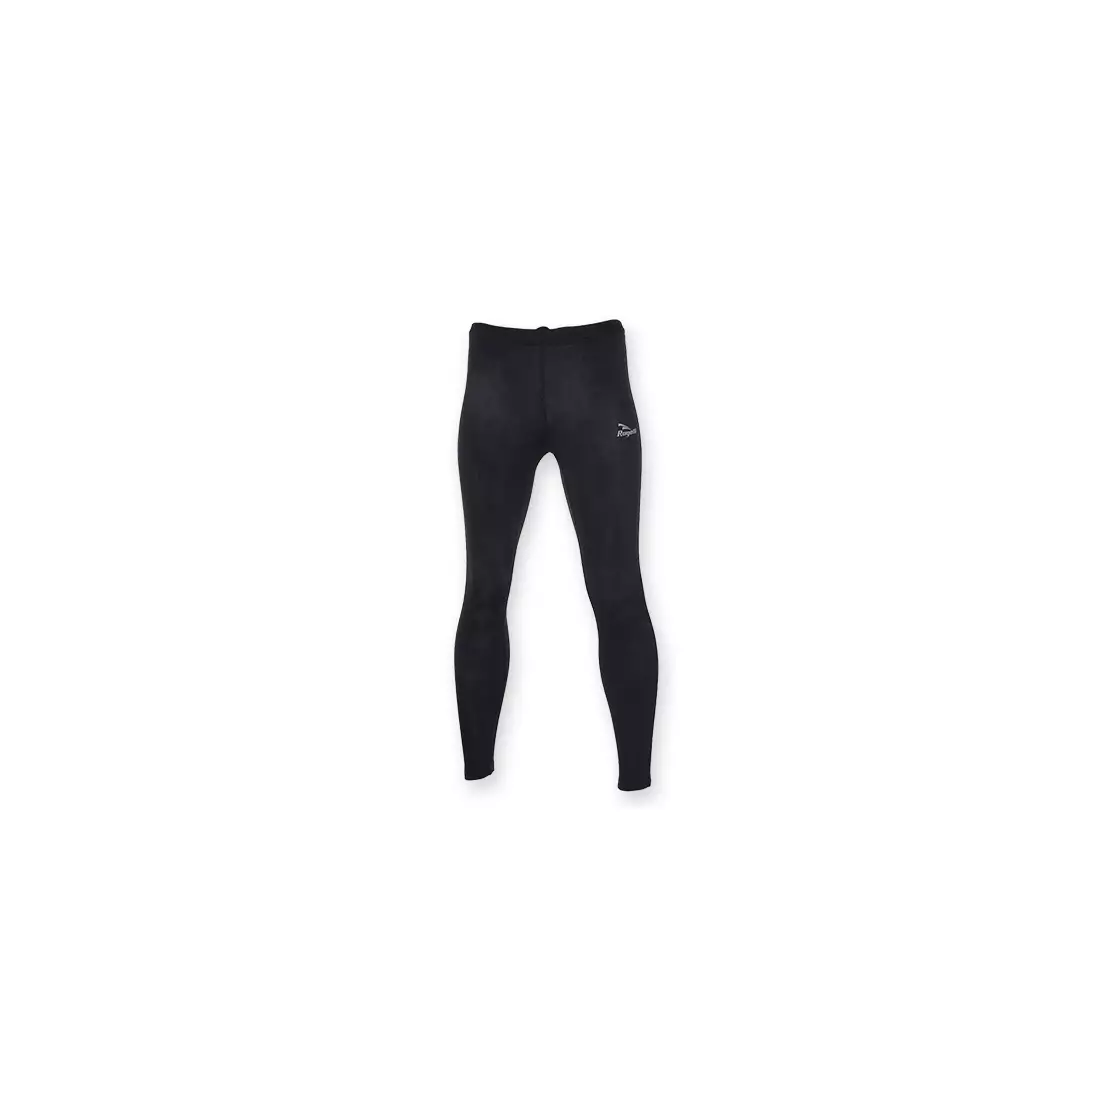 ROGELLI RUN BIXBY - men's uninsulated running pants - color: Black